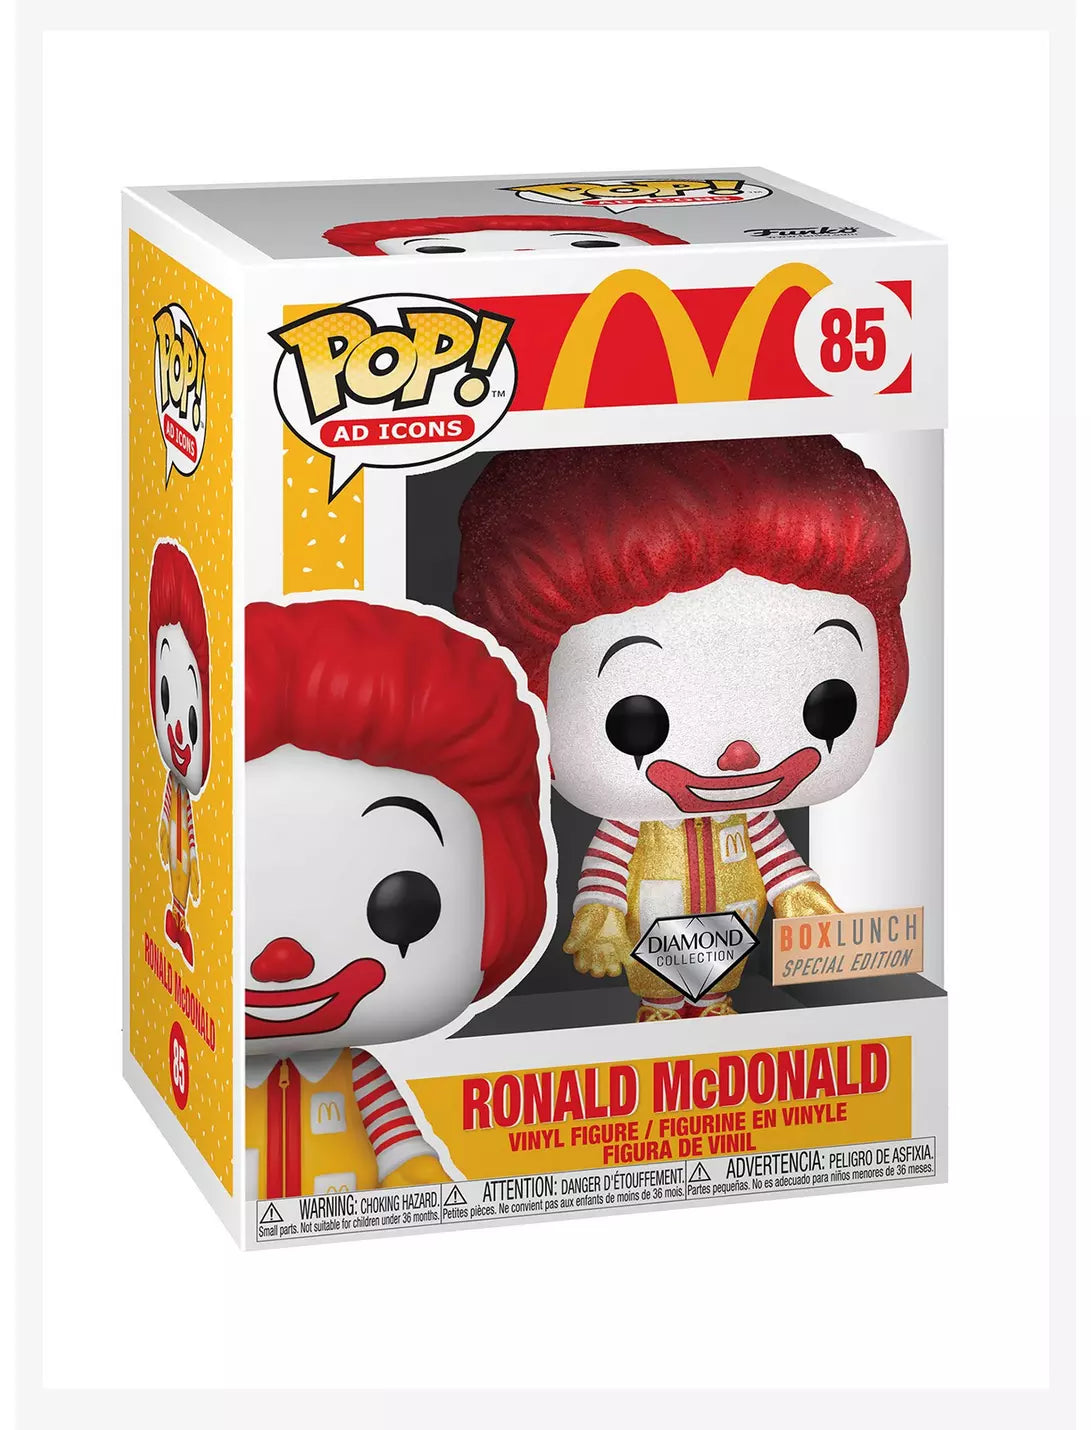 Funko Ad Icons: Mcdonald's Ronald McDonald #85